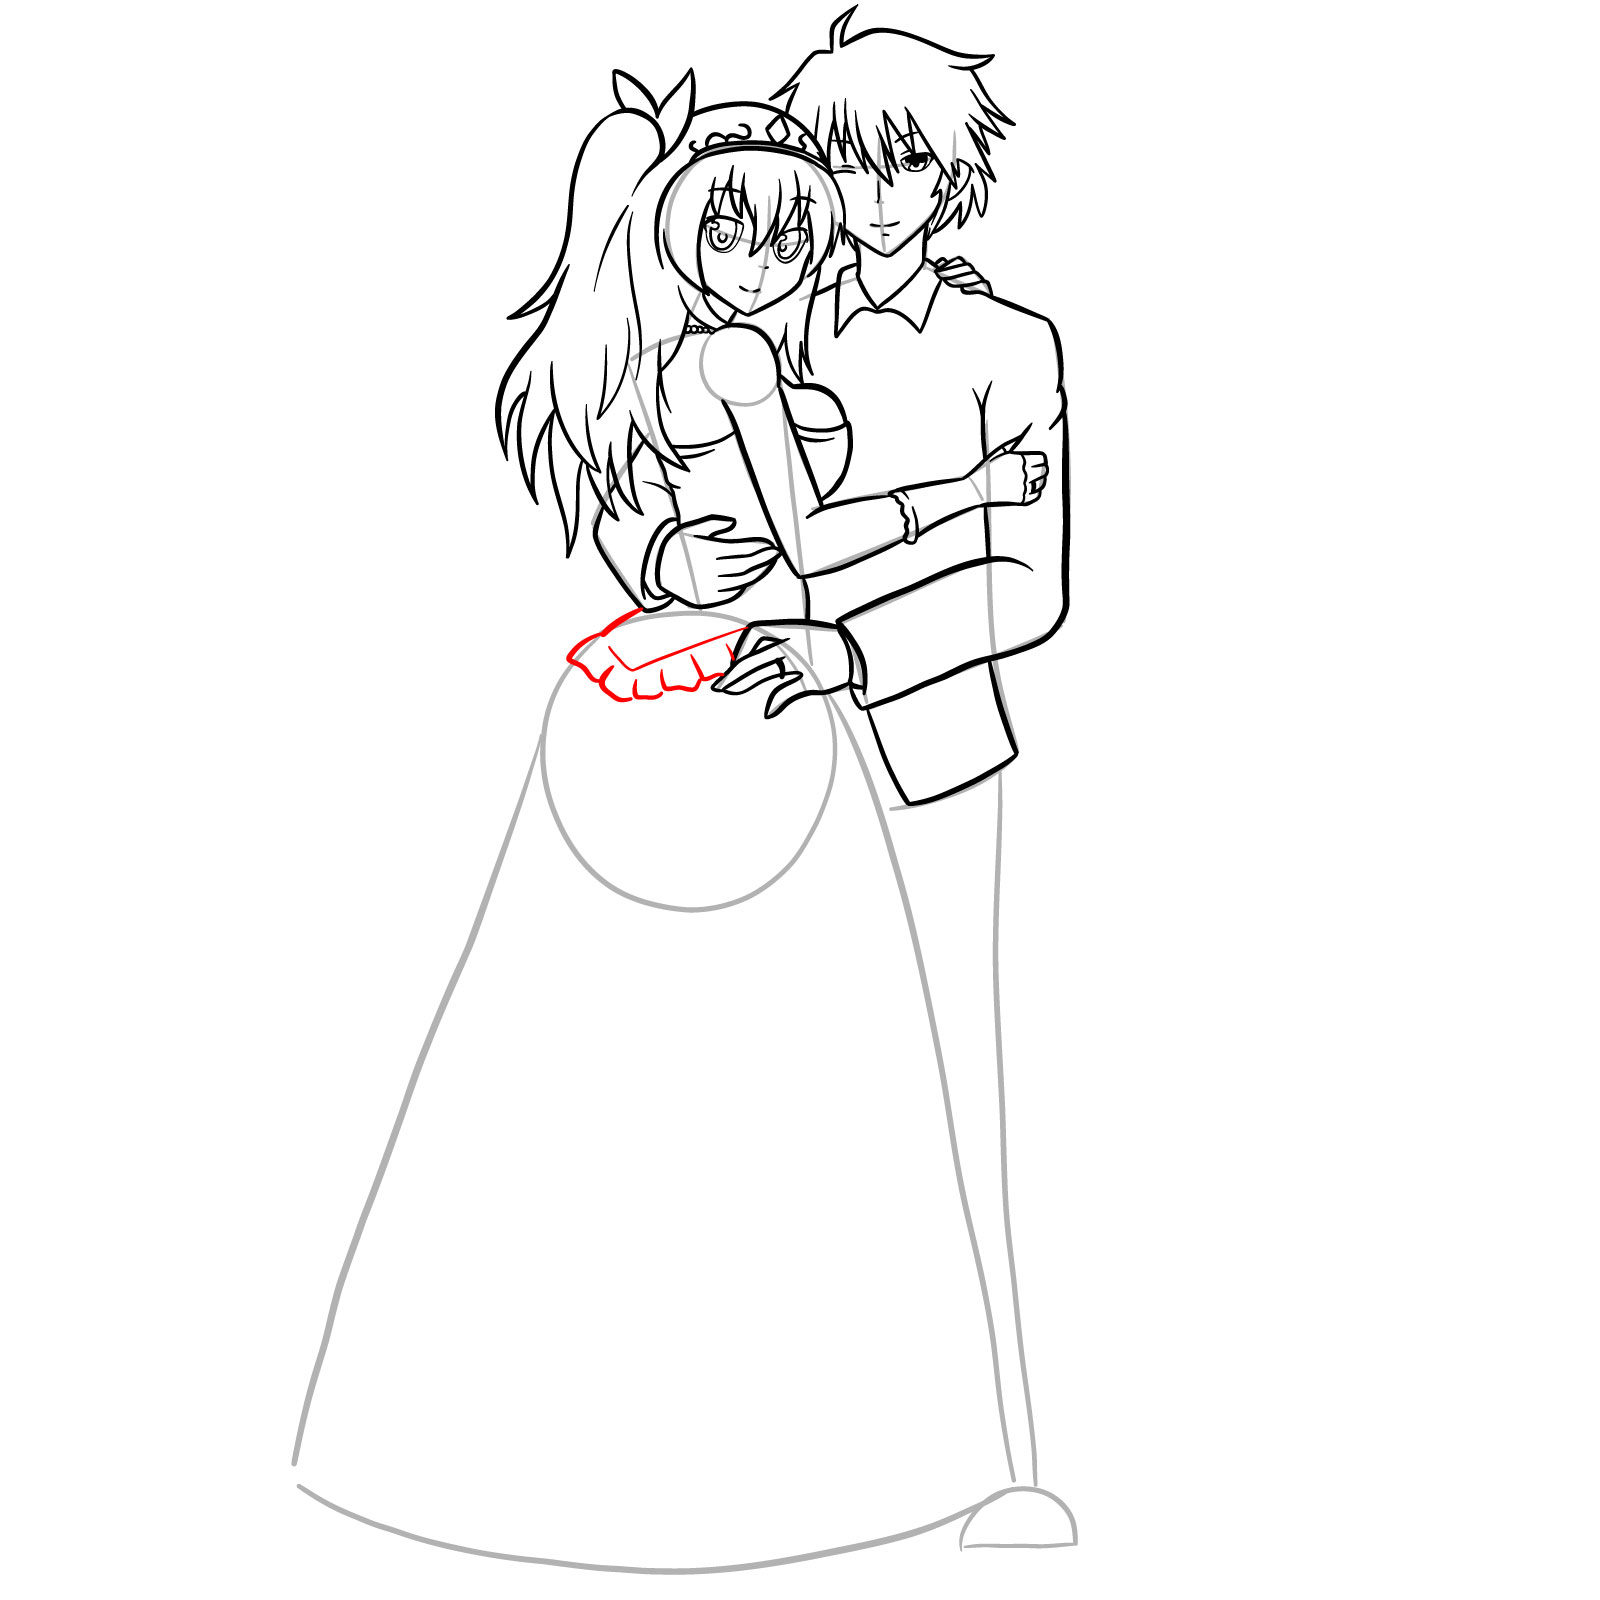 How to draw Ikki and Stella's wedding - step 45